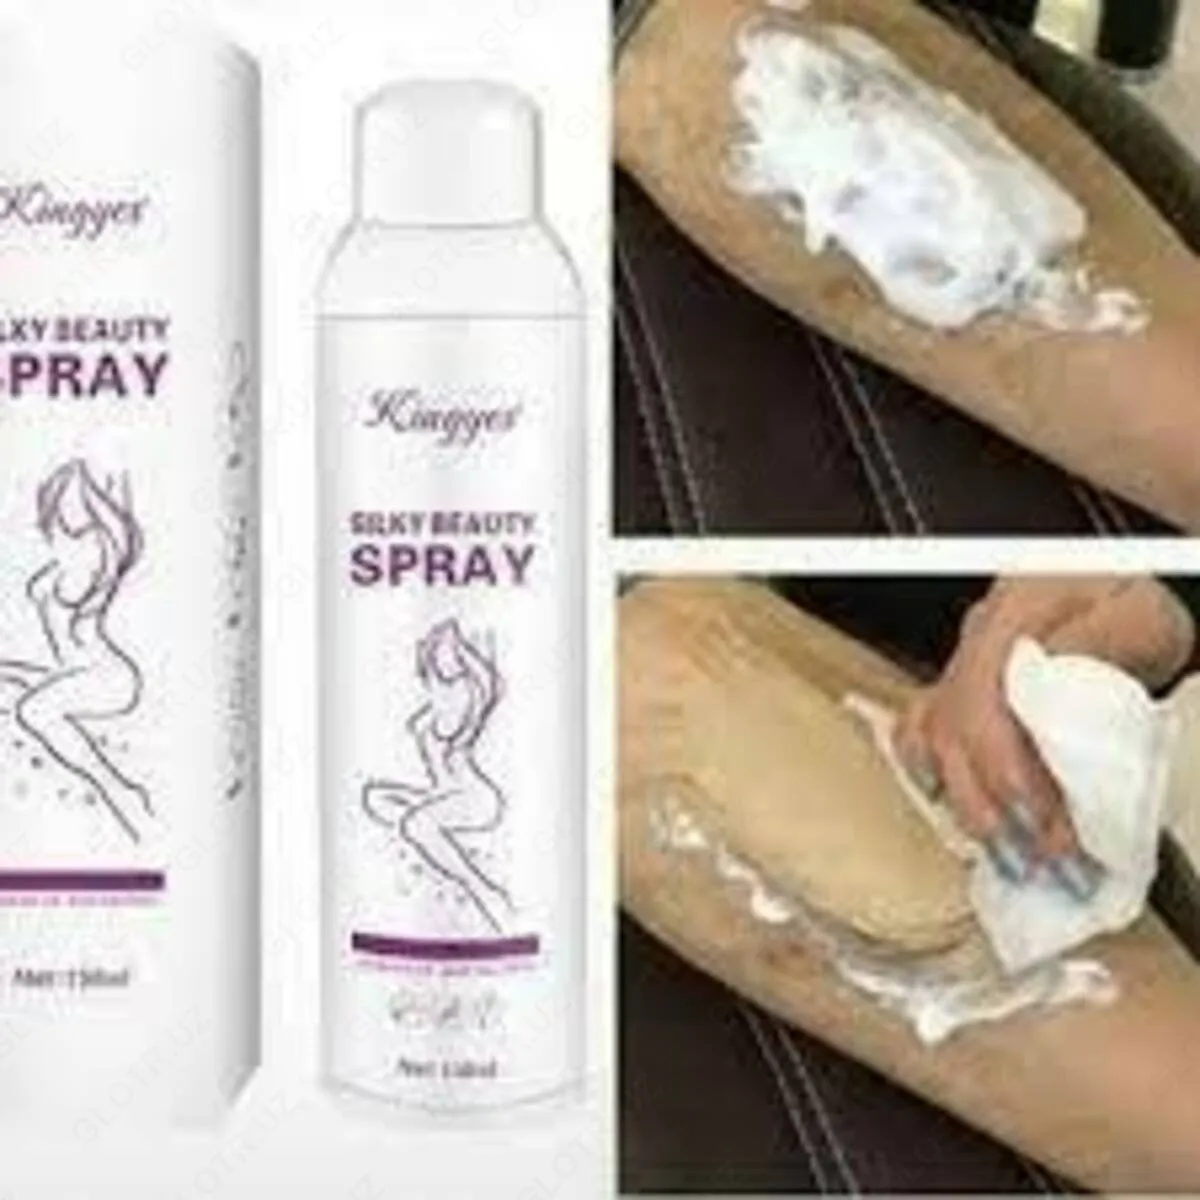 Спрей для депиляции Silky Beauty Spray от Kingyes#2